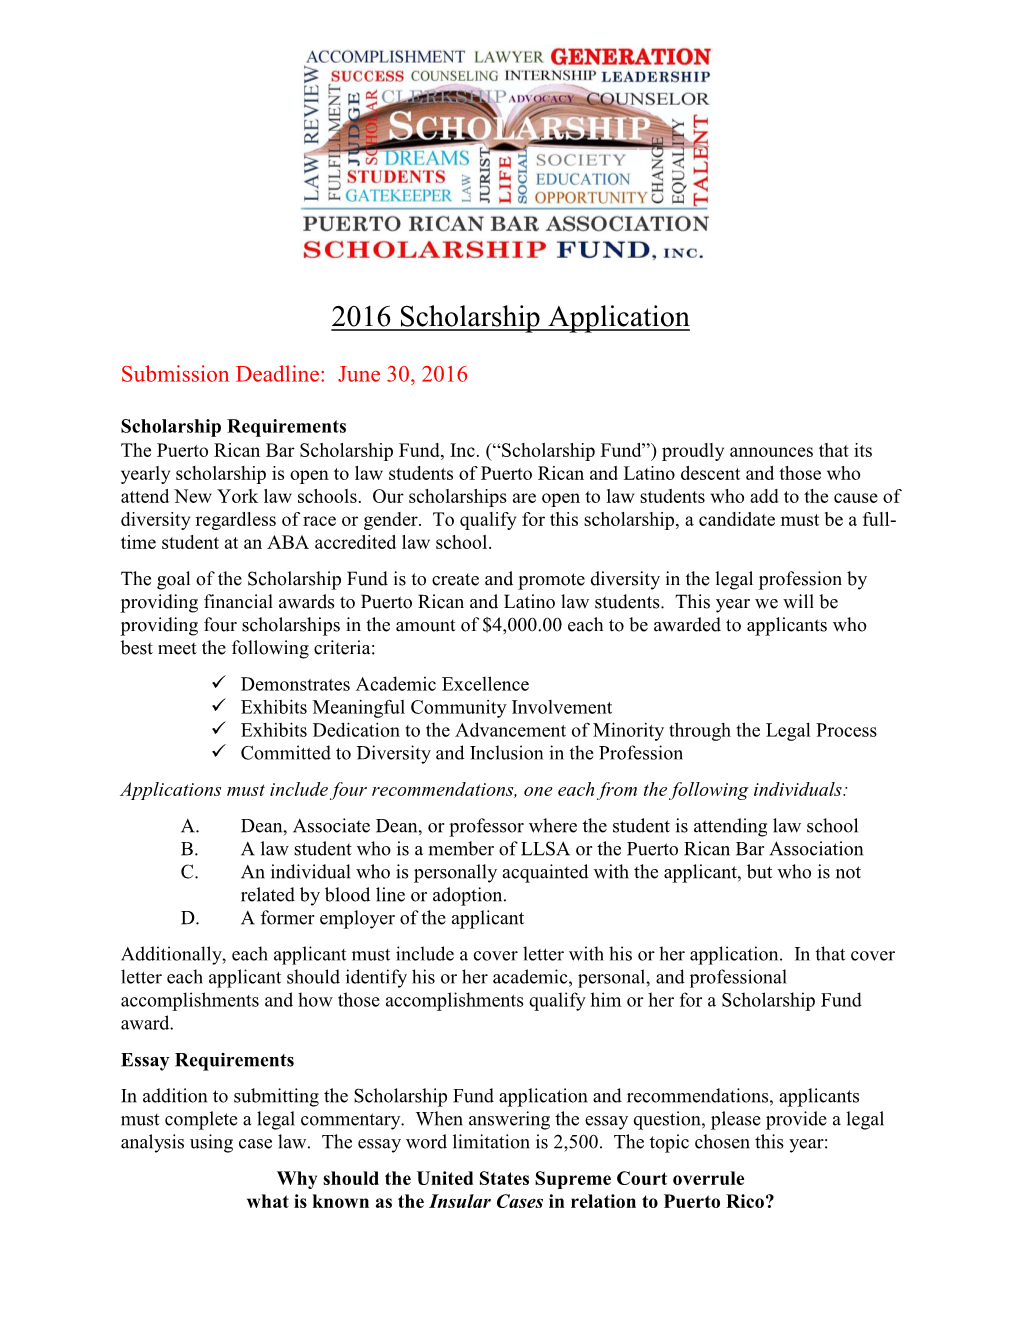 PRBA Scholarship Application